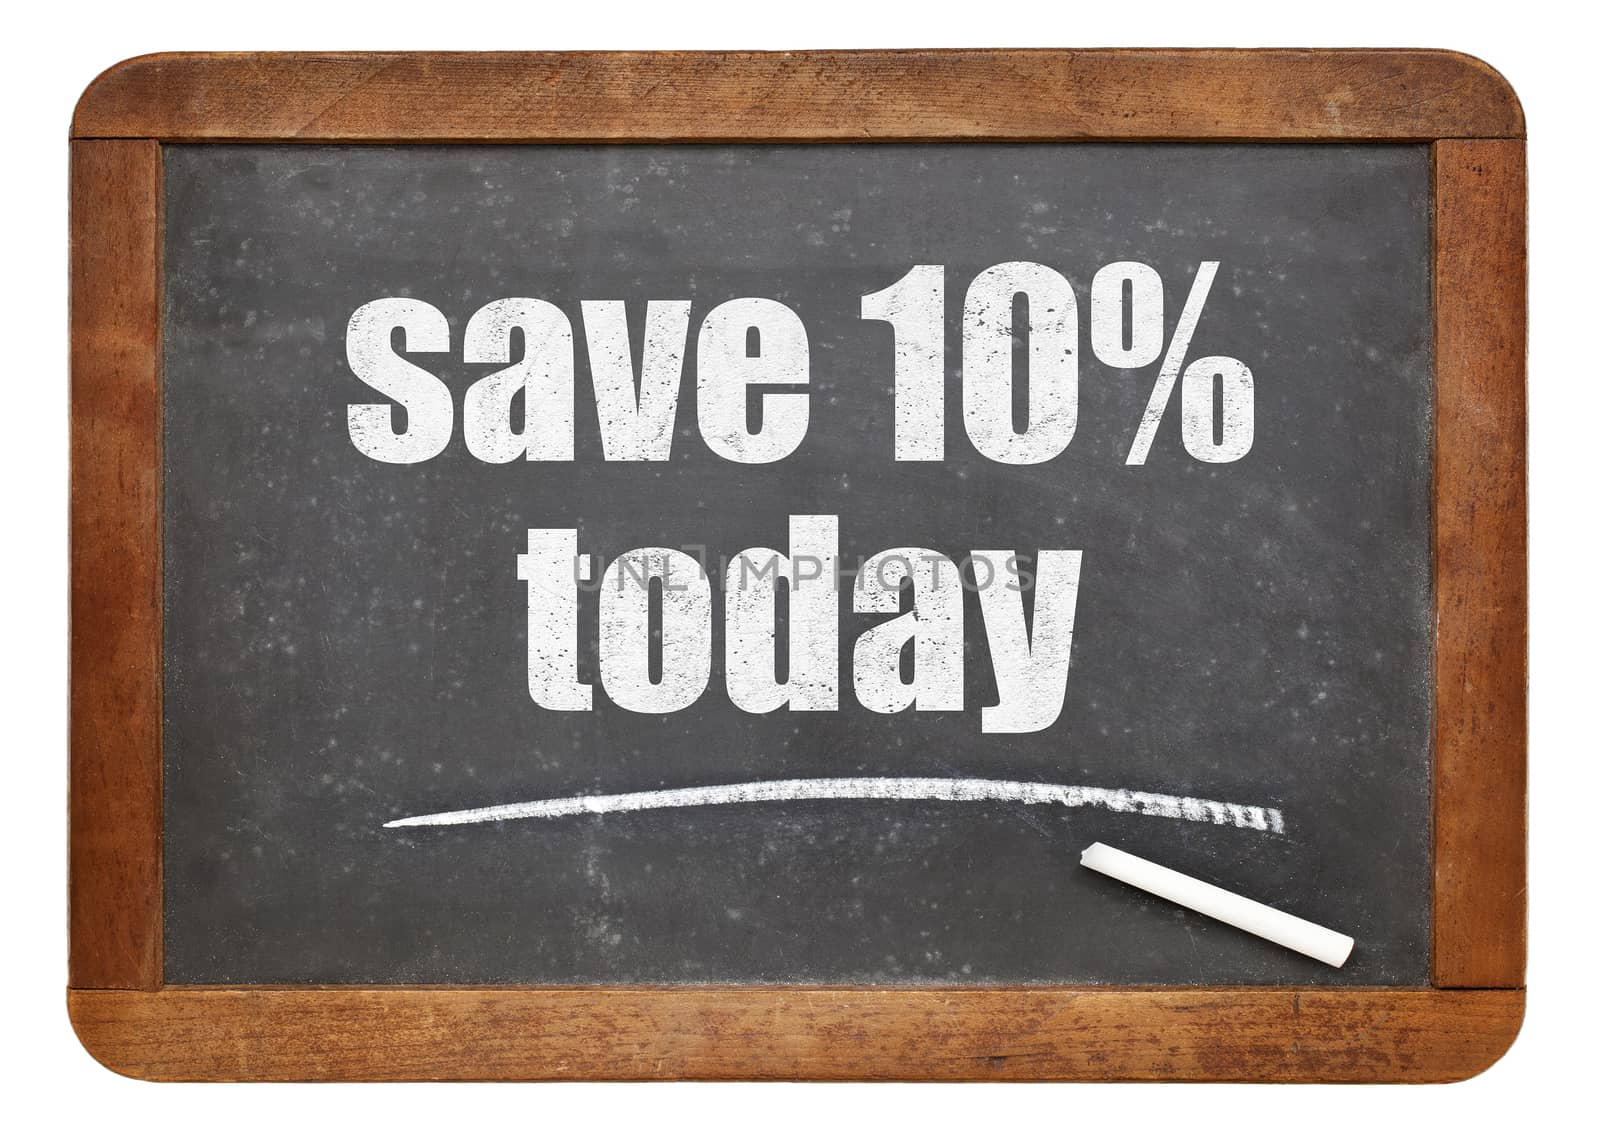 Save 10% today offer on blackboard by PixelsAway